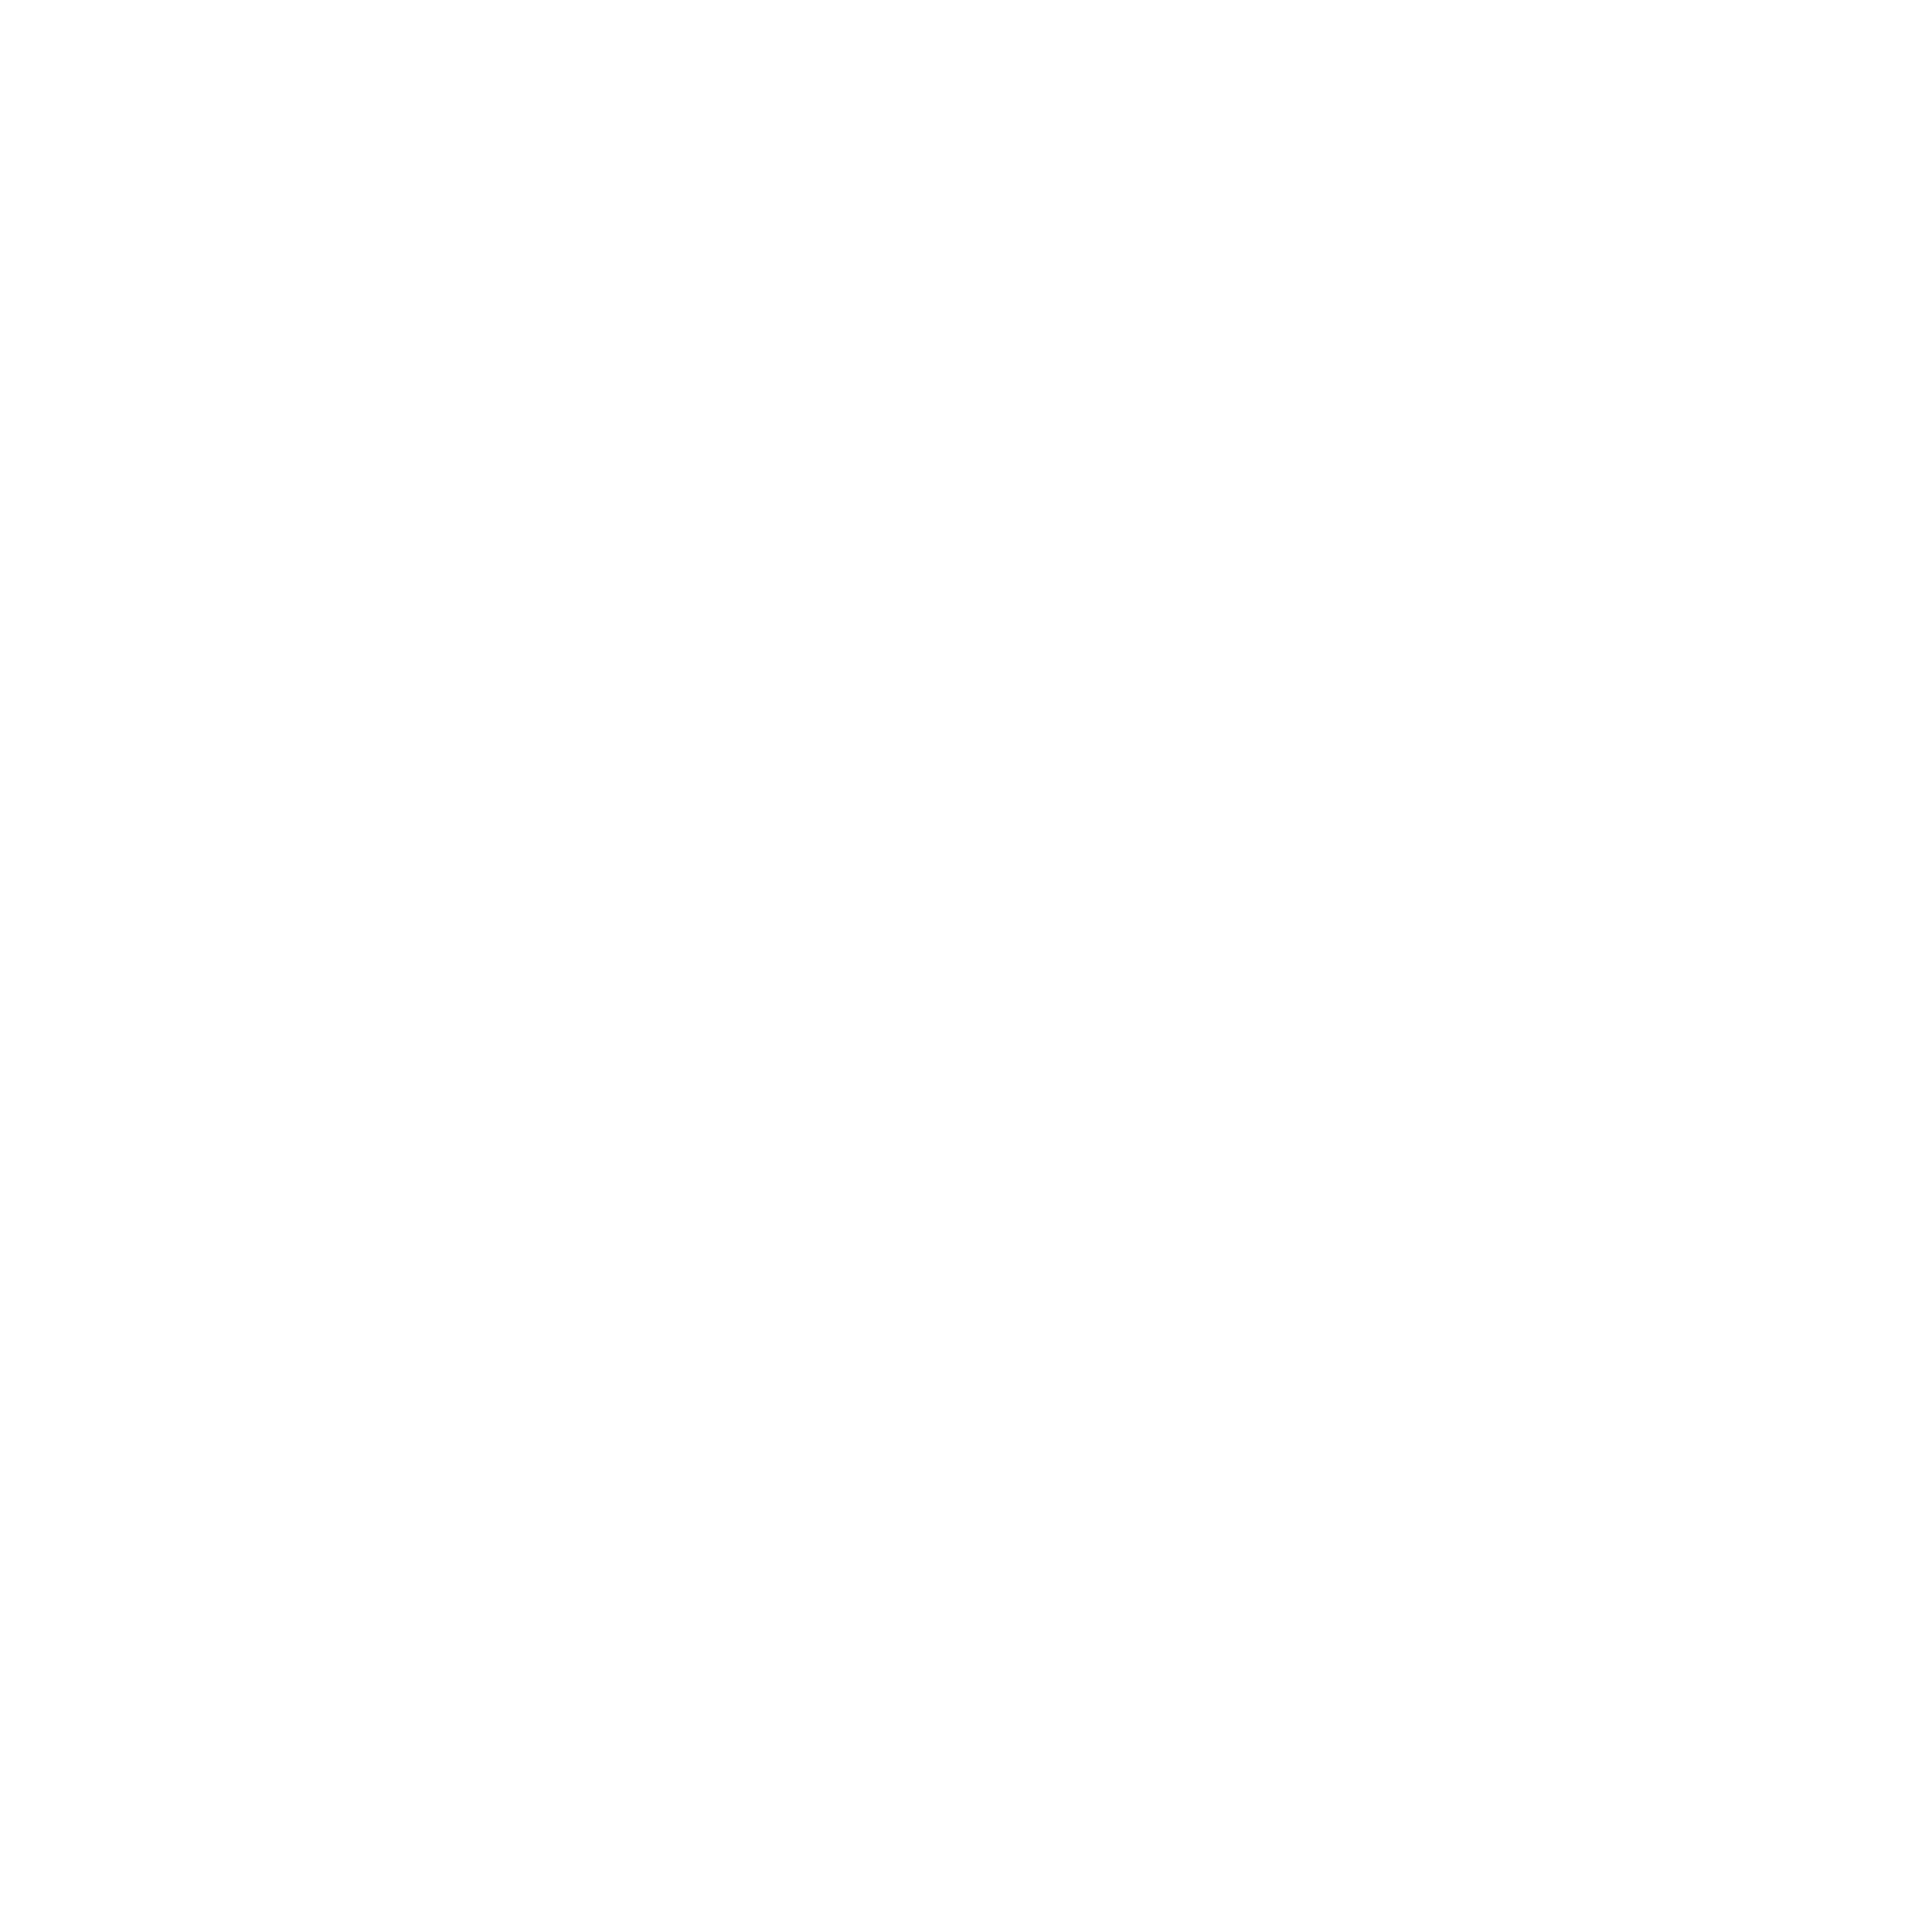 mielle-cares-logo-white.png